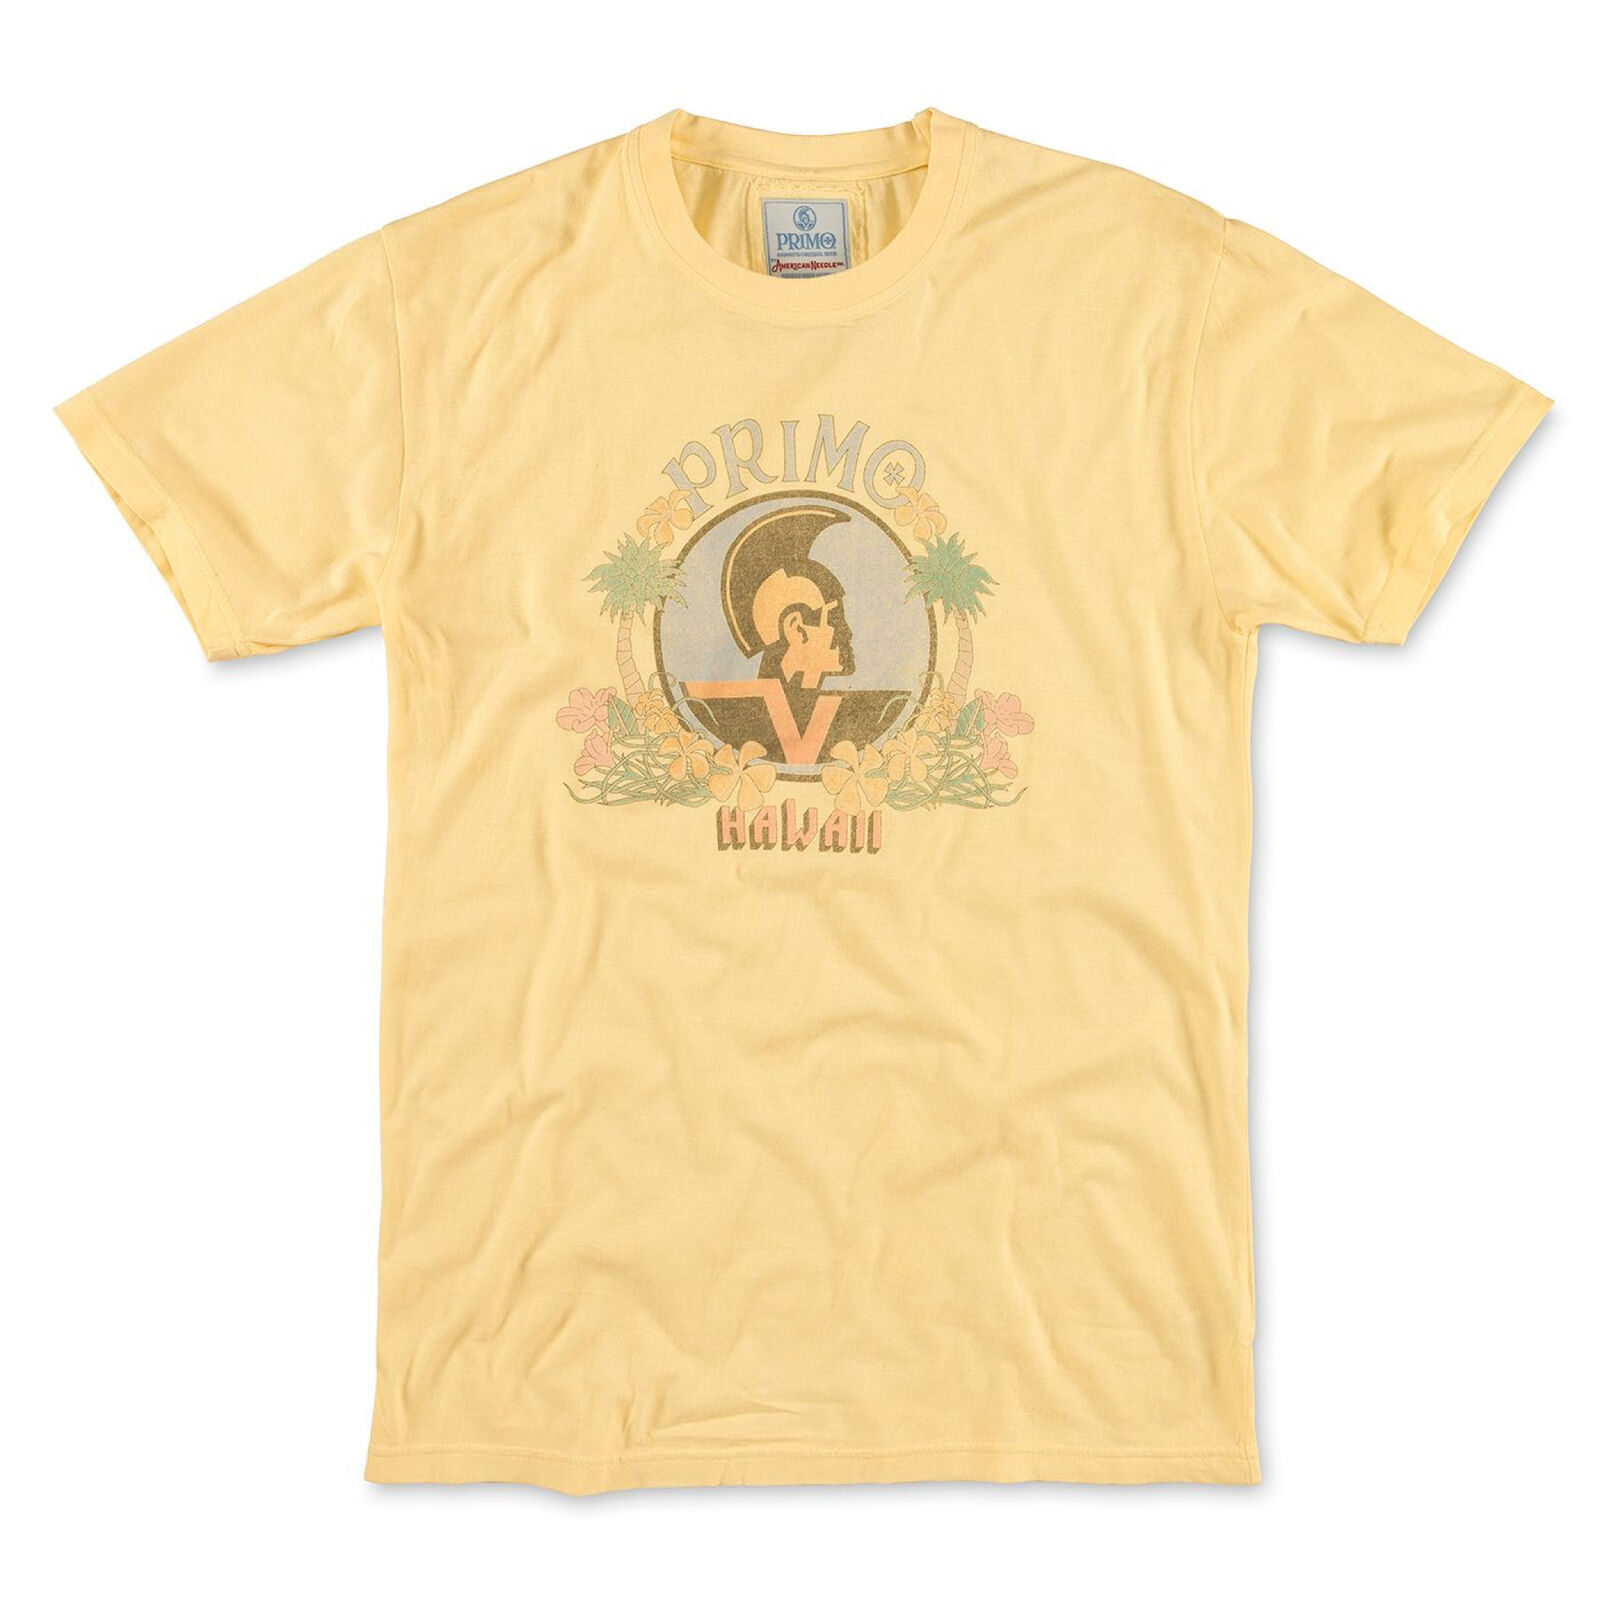 Primo Beer Hawaii Vintage Fade T-Shirt Yellow - $41.98 - $43.98